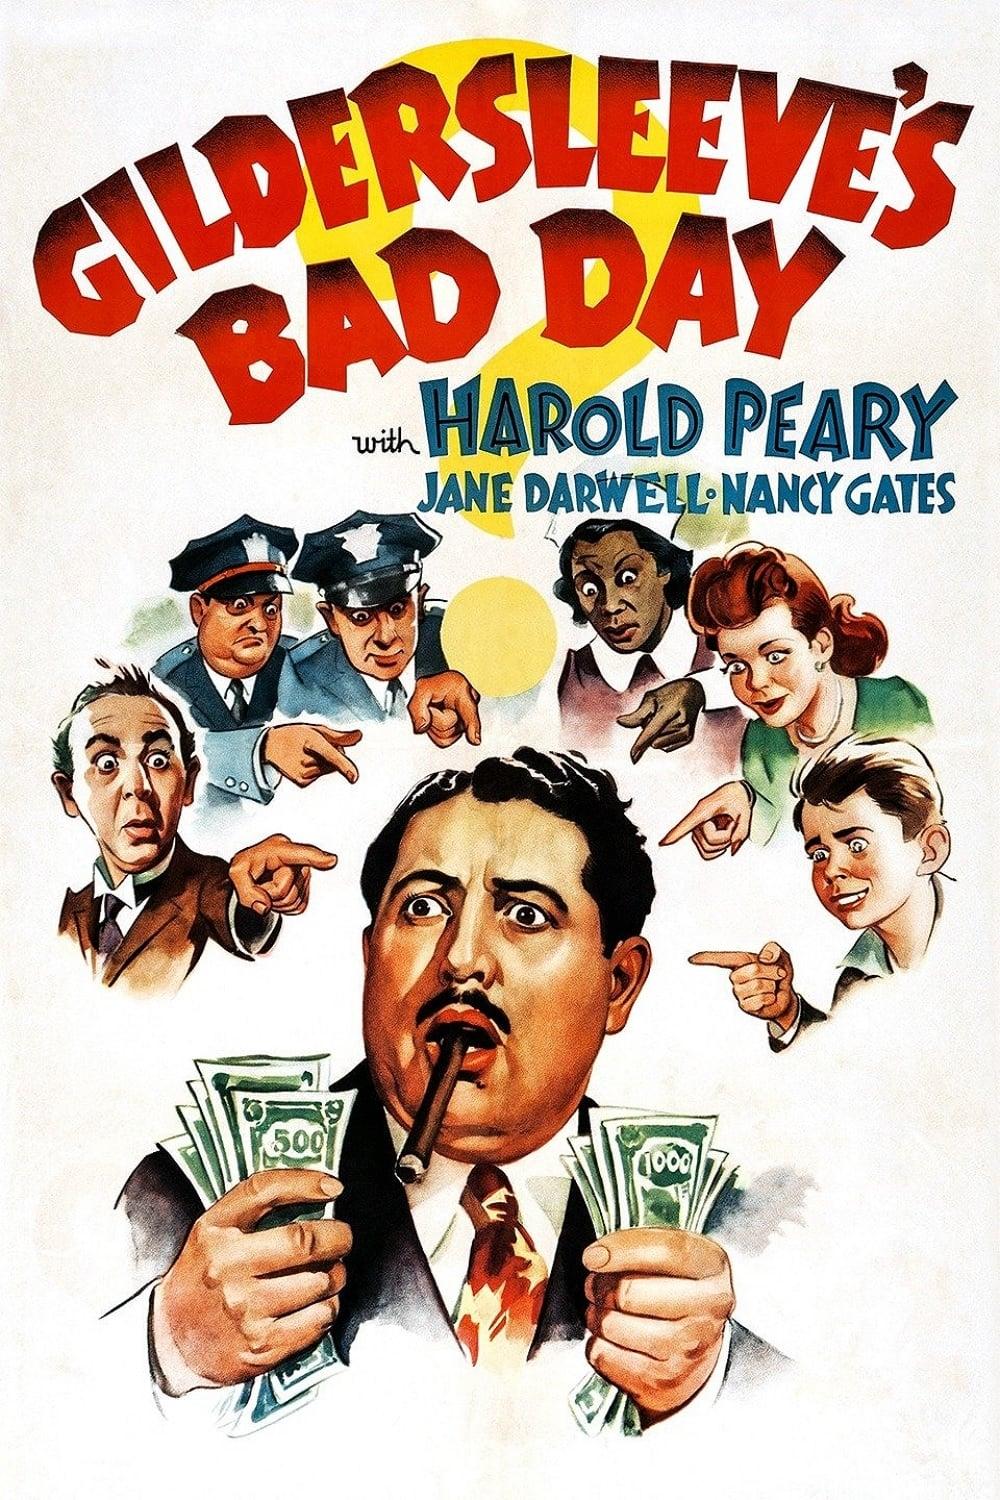 Gildersleeve's Bad Day poster